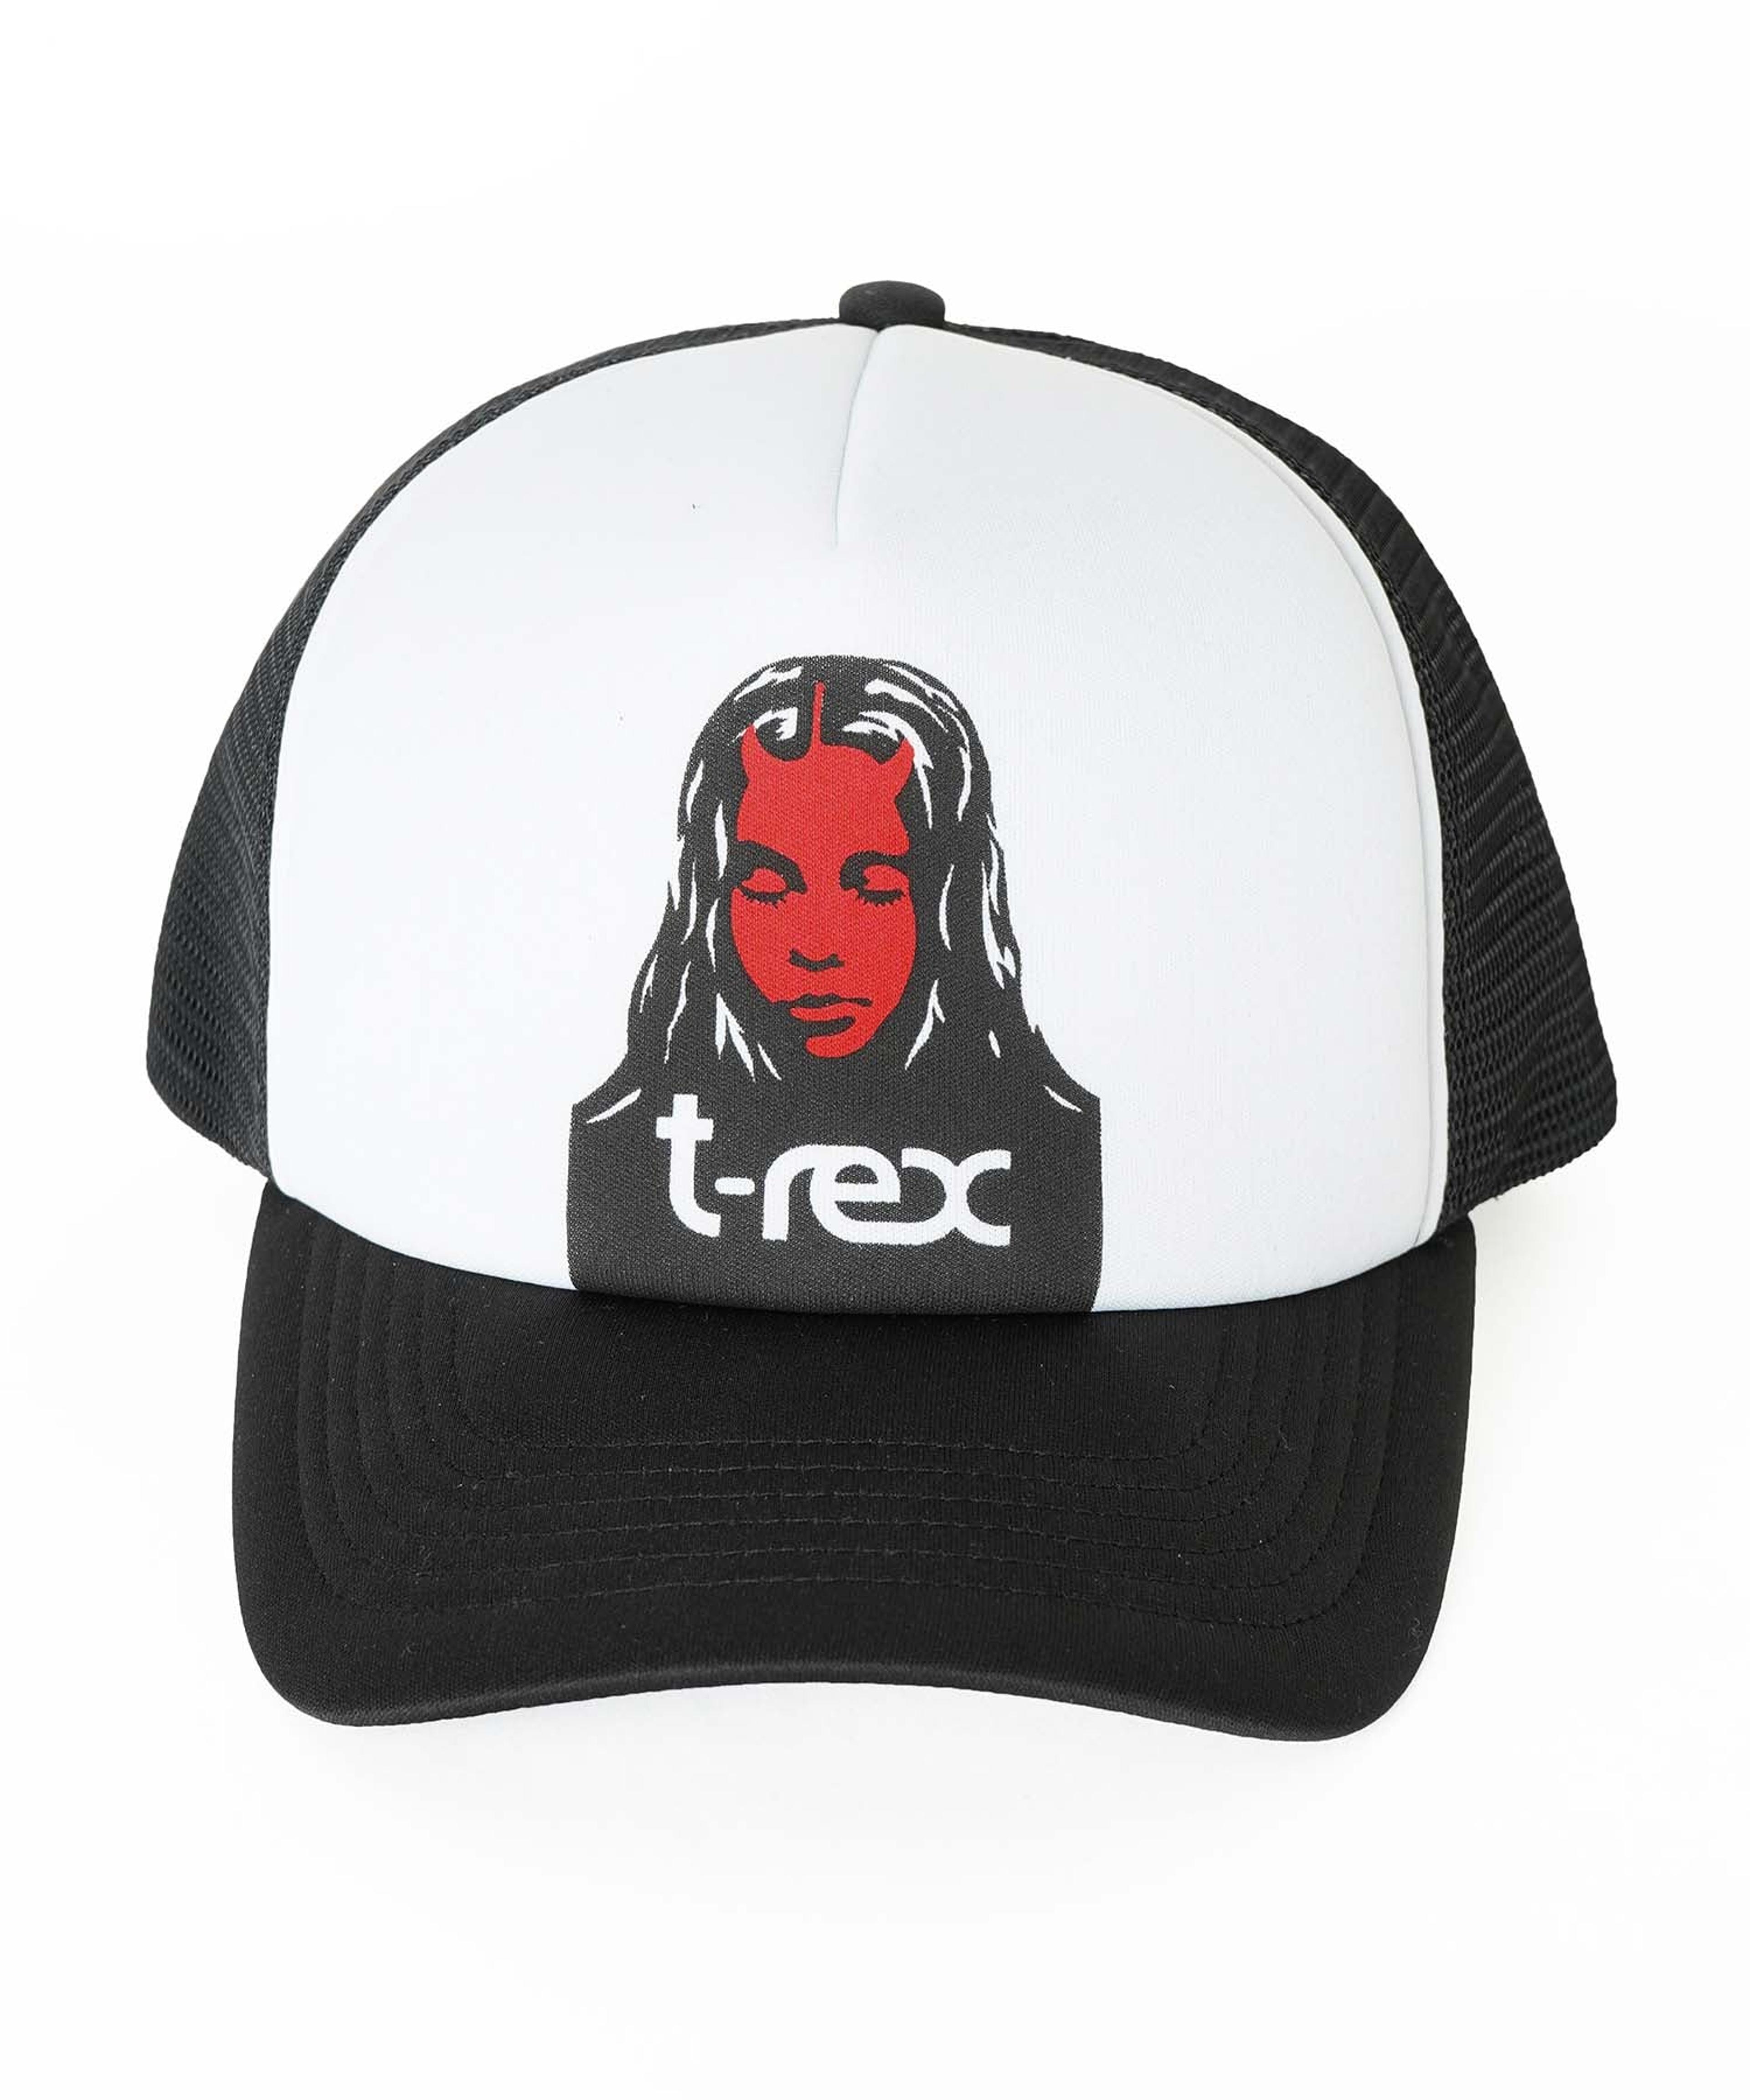 Alternate View 2 of X-girl x T-REX MESH CAP